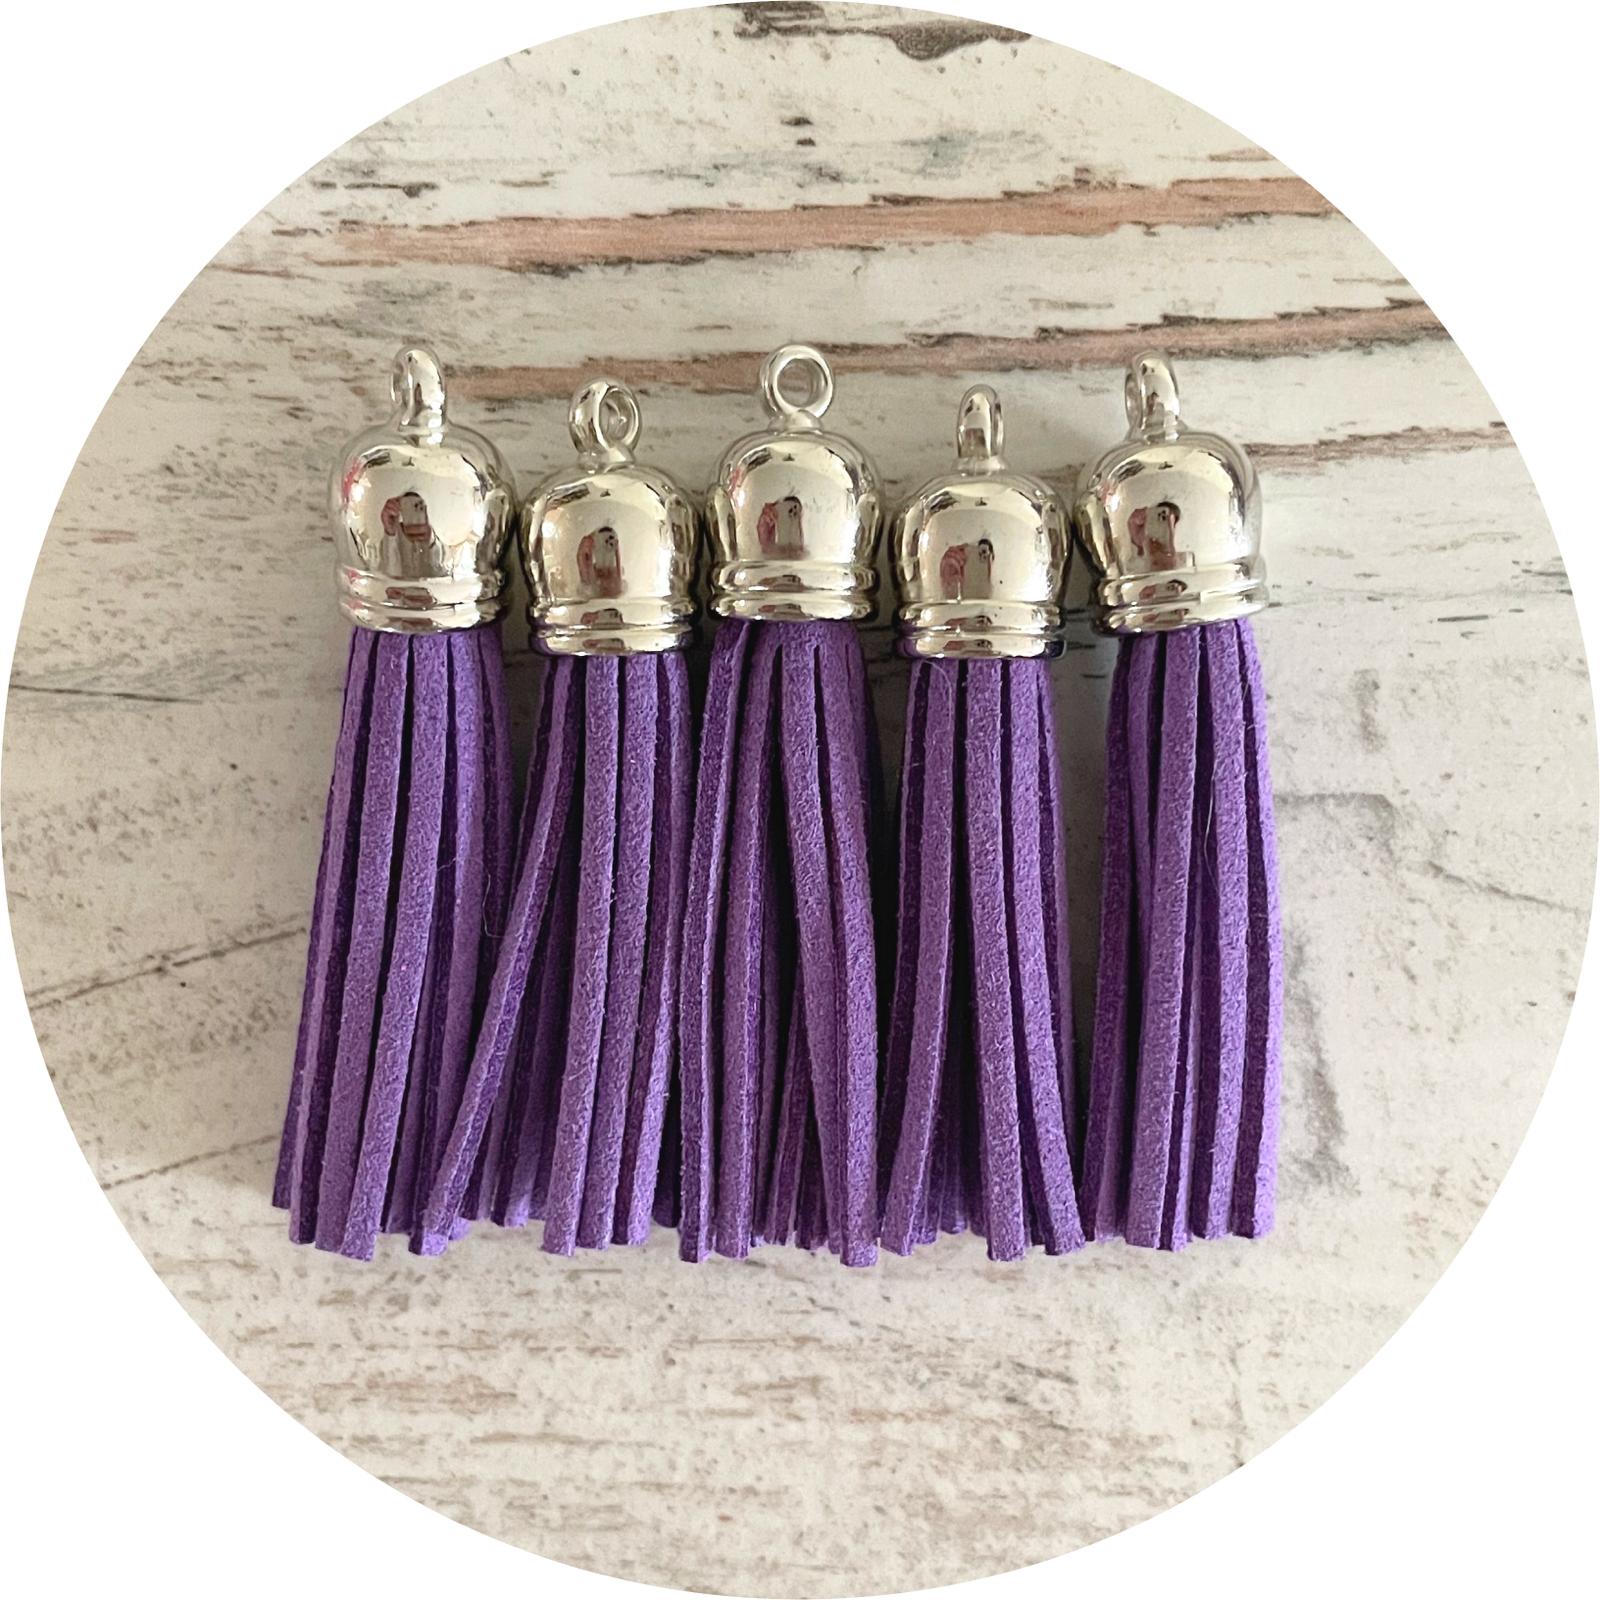 55mm Suede Tassels Silver Cap - Lavender Purple - Each